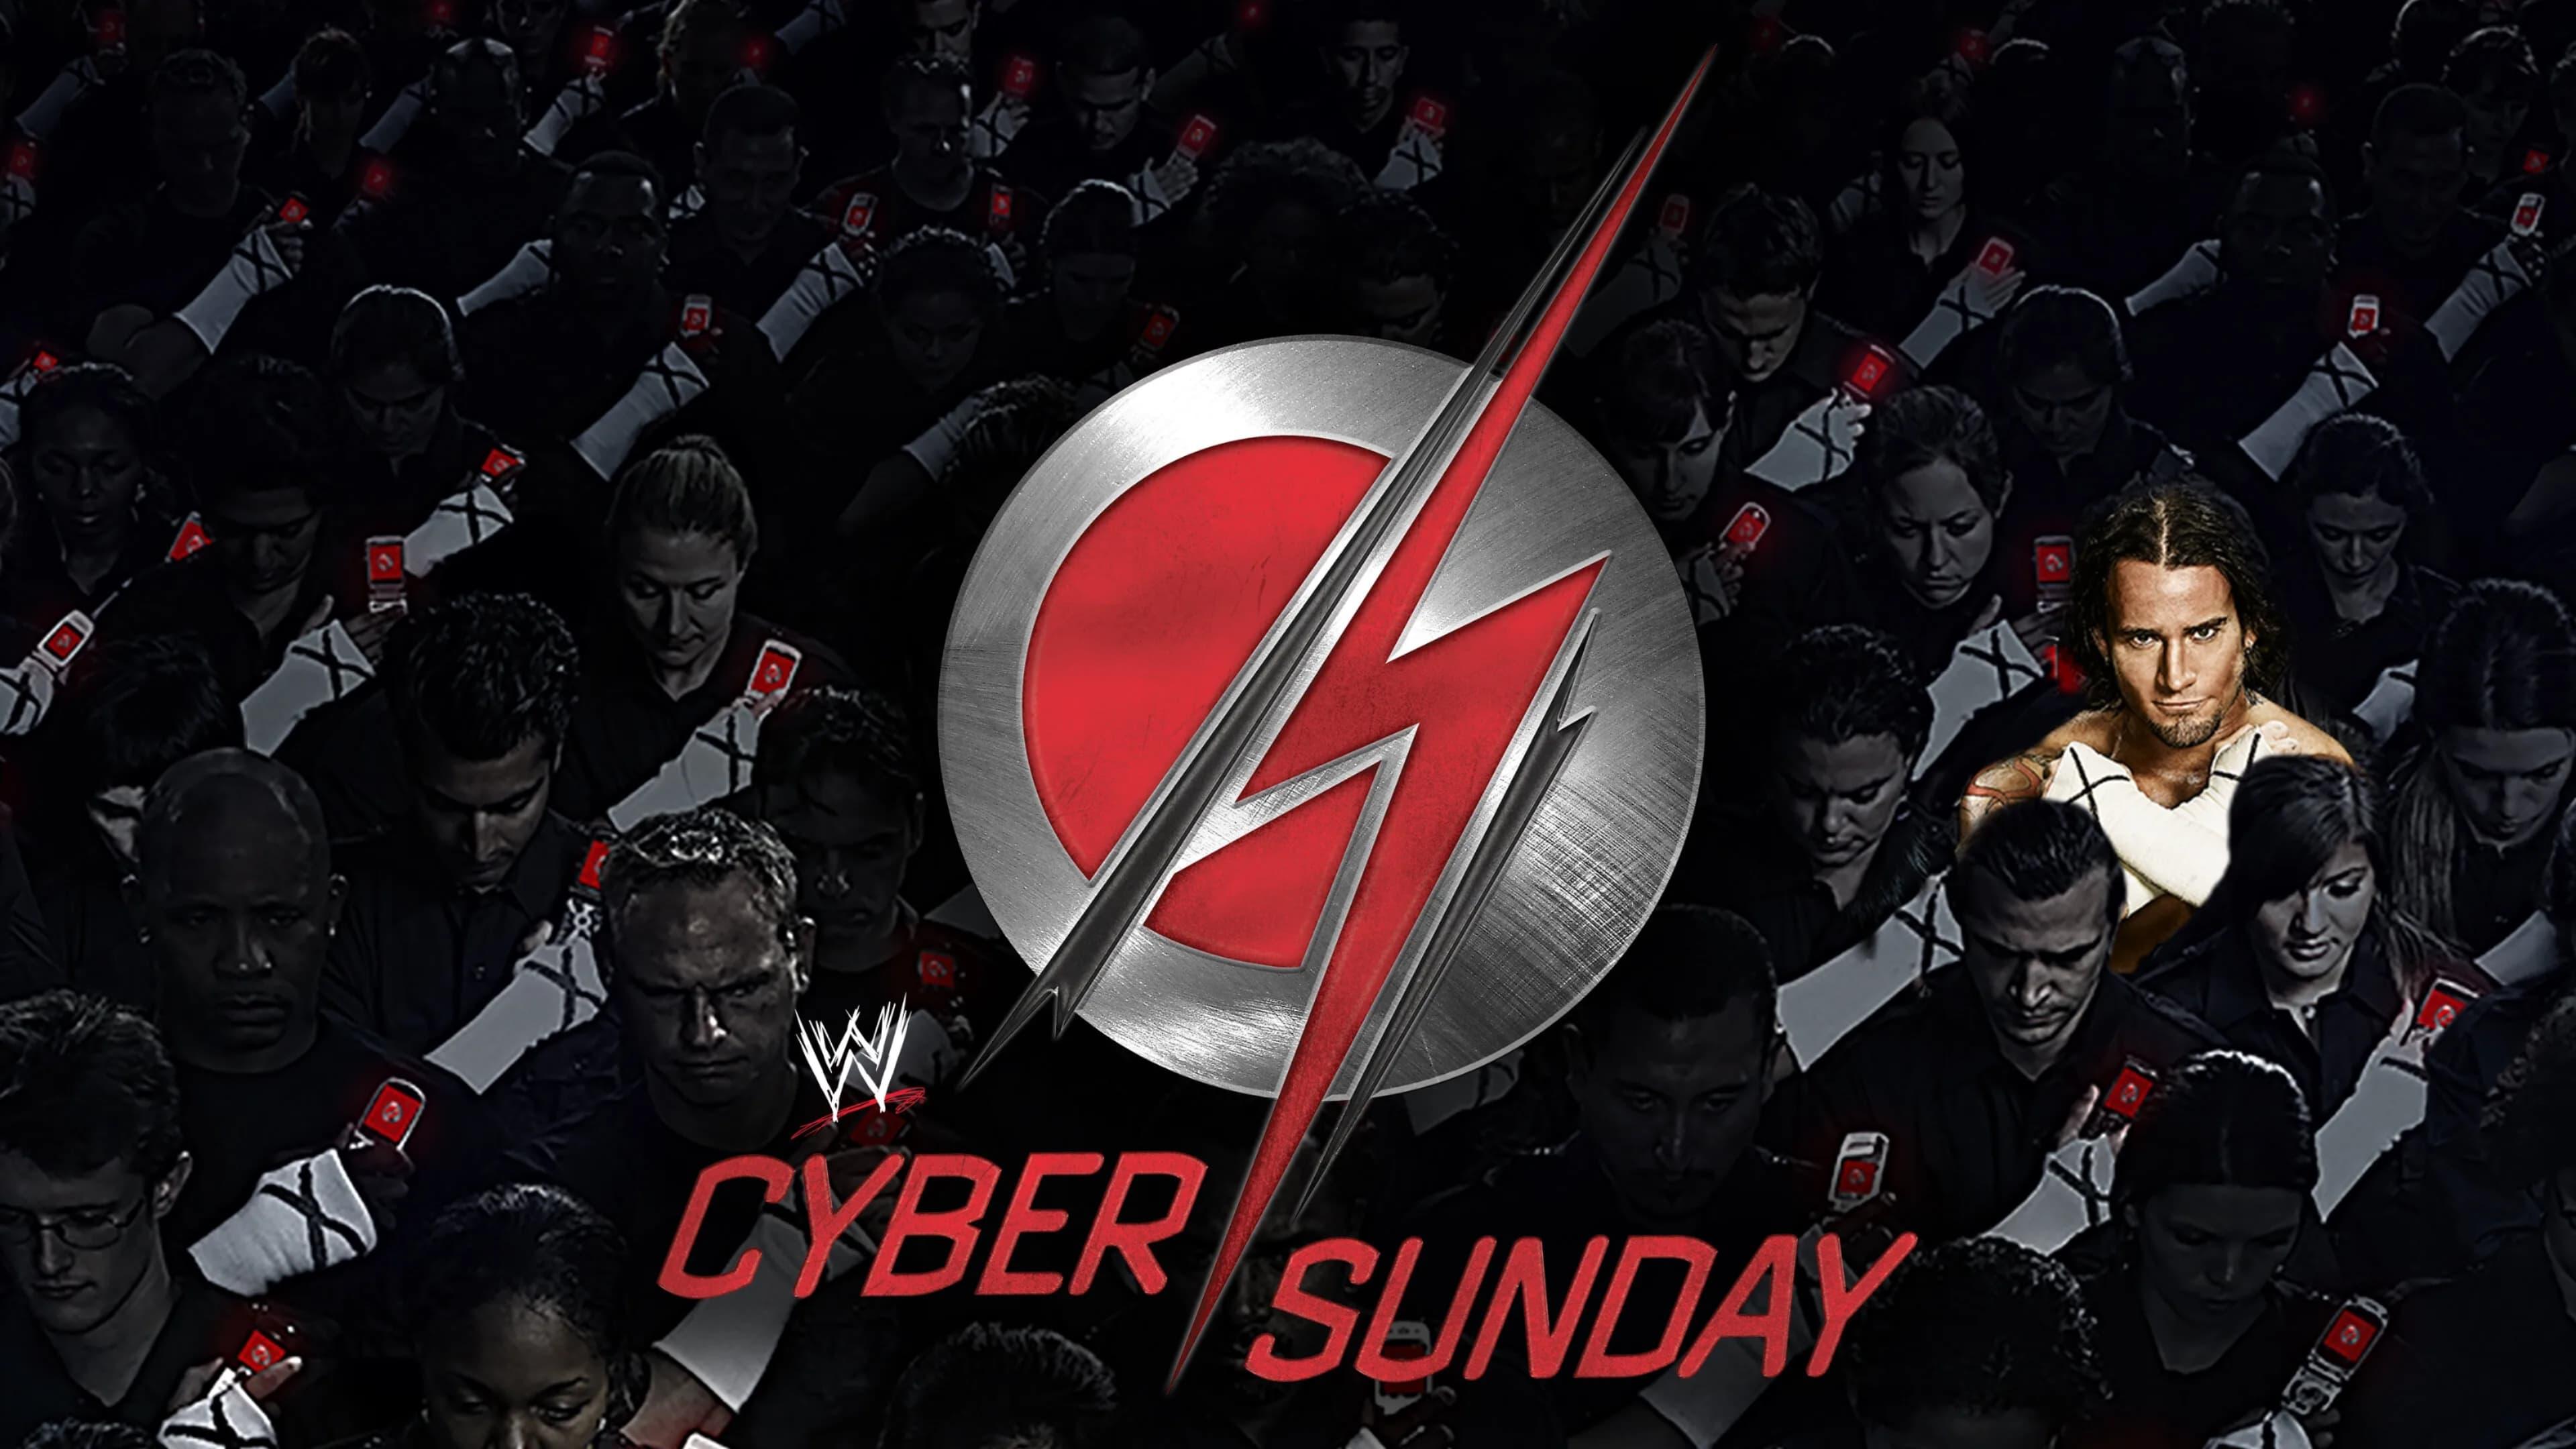 WWE Cyber Sunday 2008 backdrop